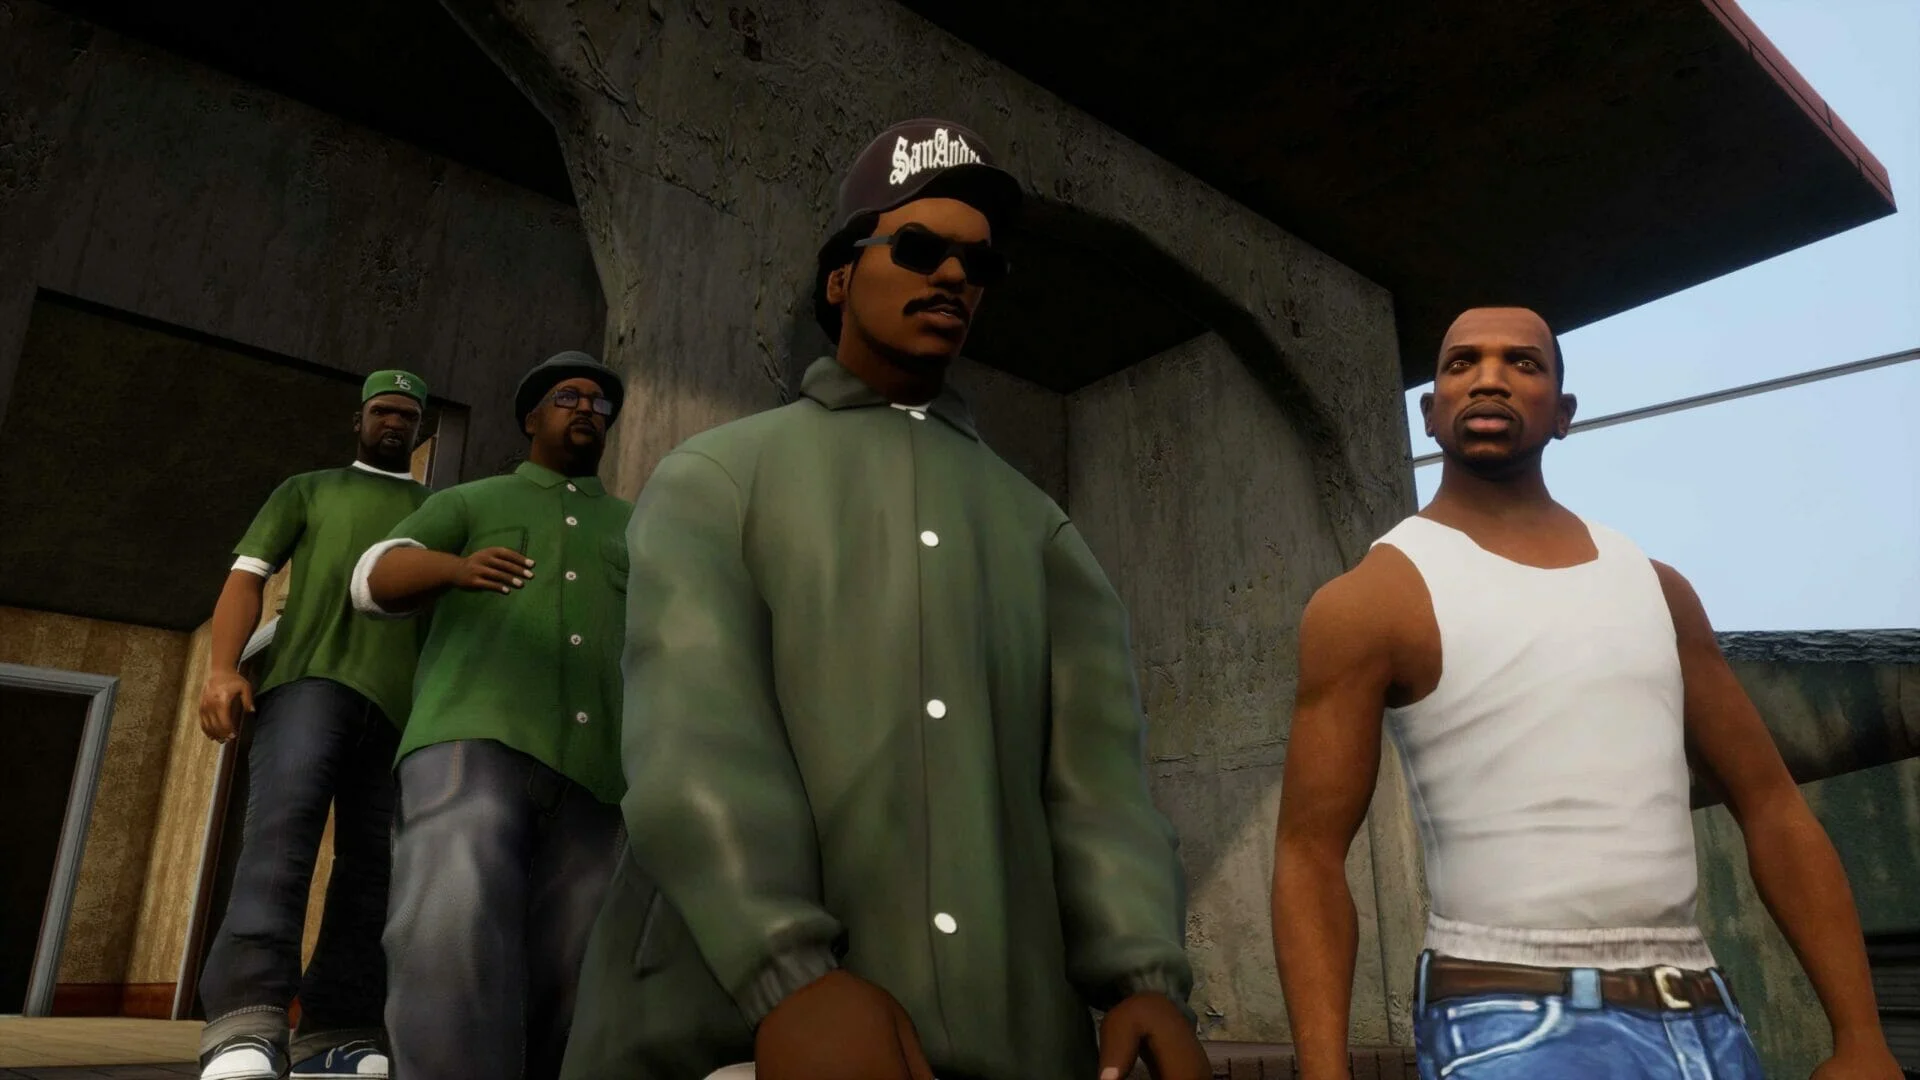 GTA (Grand Theft Auto): San Andreas | A modern tale that described an era